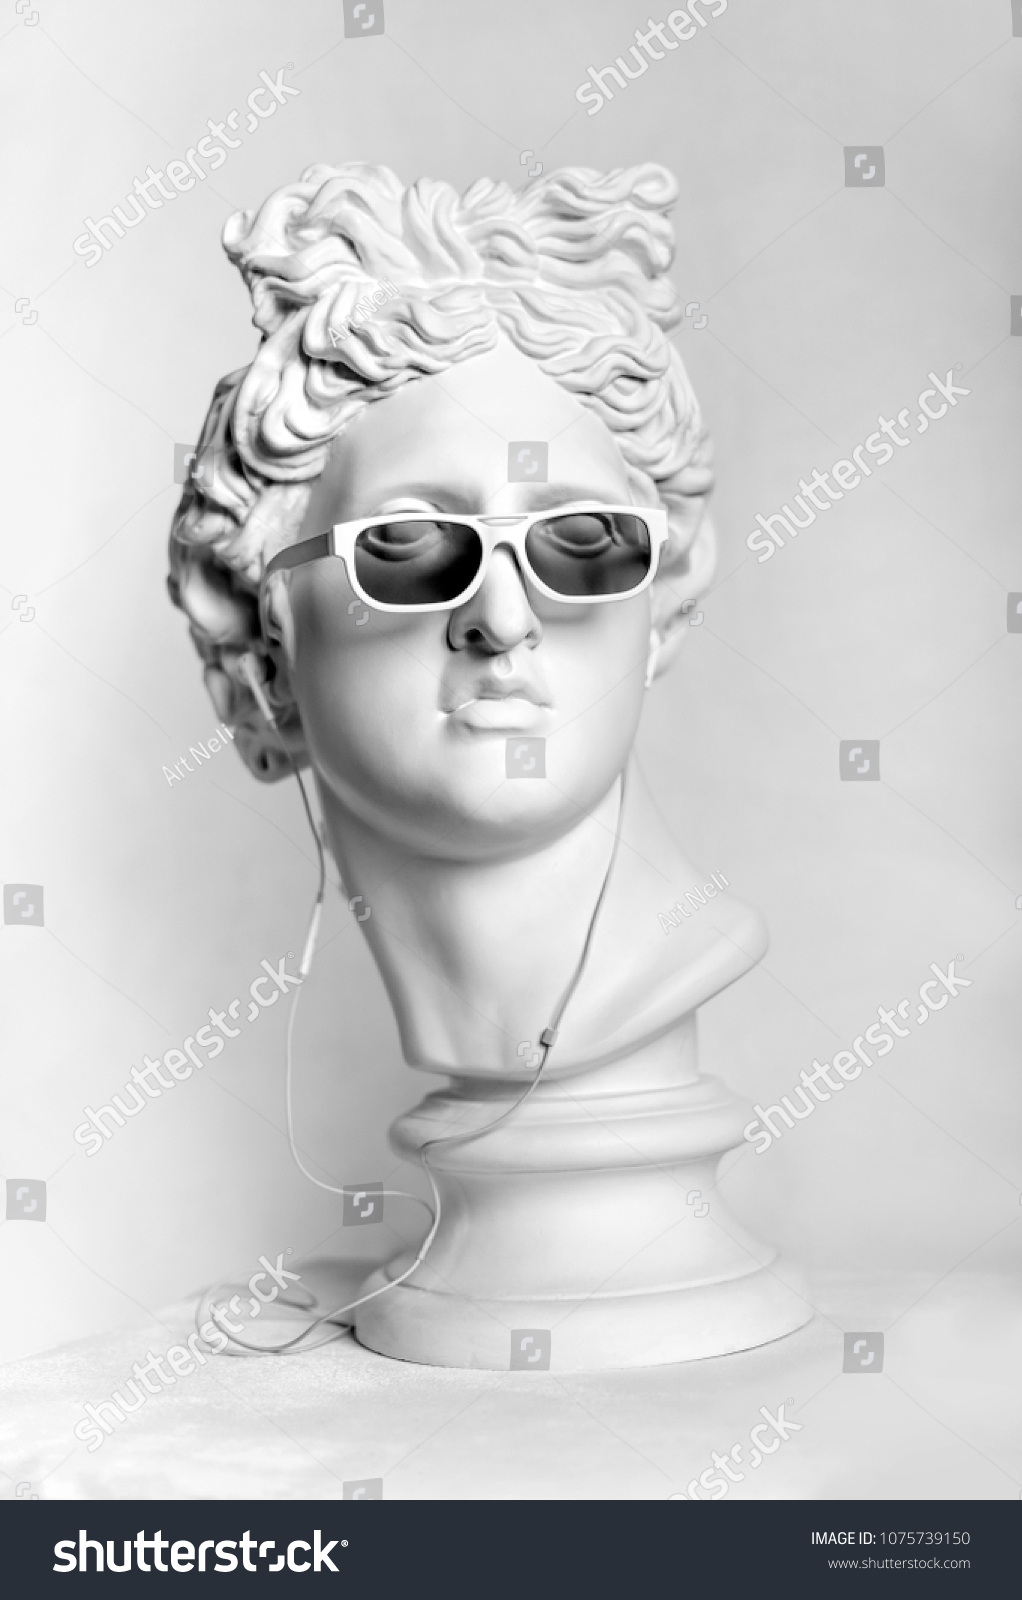 Statue. Earphone. Isolated. Gypsum statue of Apollo's head. Man. Creative. Plaster statue of Apollo's head in earphones and white sunglasses. Head. Black Lives Matter #1075739150